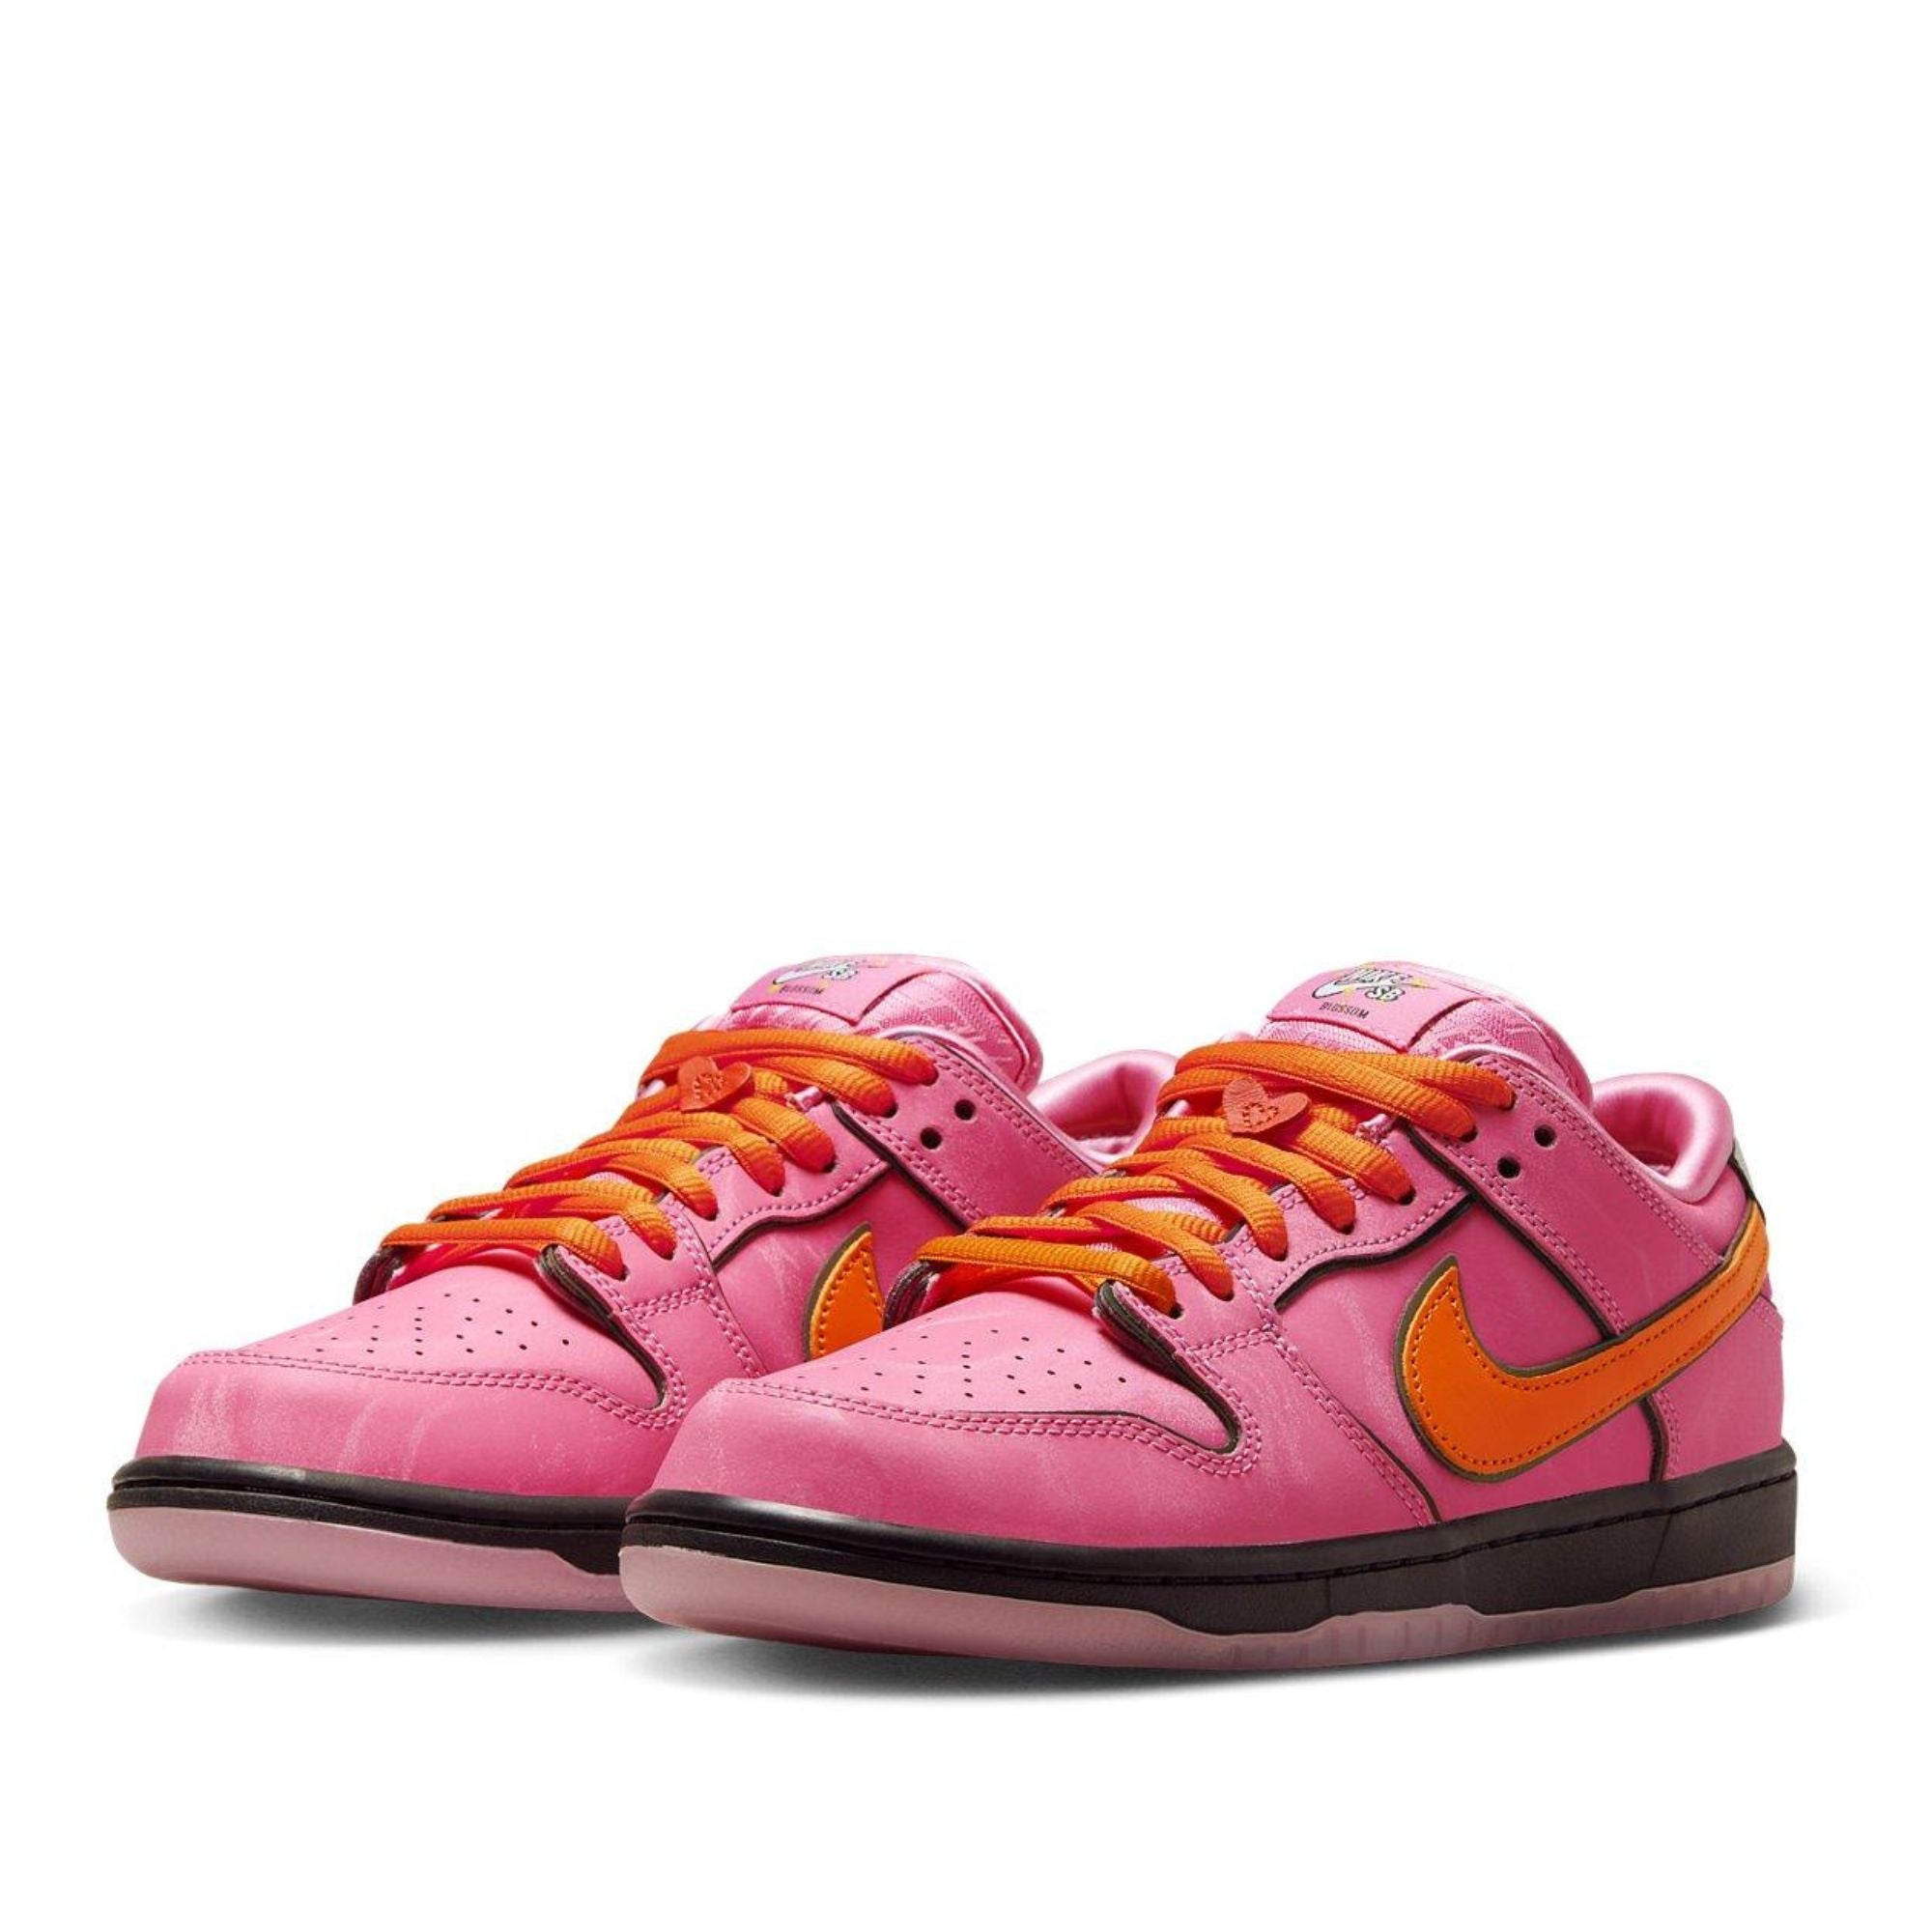 Nike Sb Dunk Low Qs The Powerpuff Girls ’Blossom’ M Us 9.5 / W 11 Sneakers